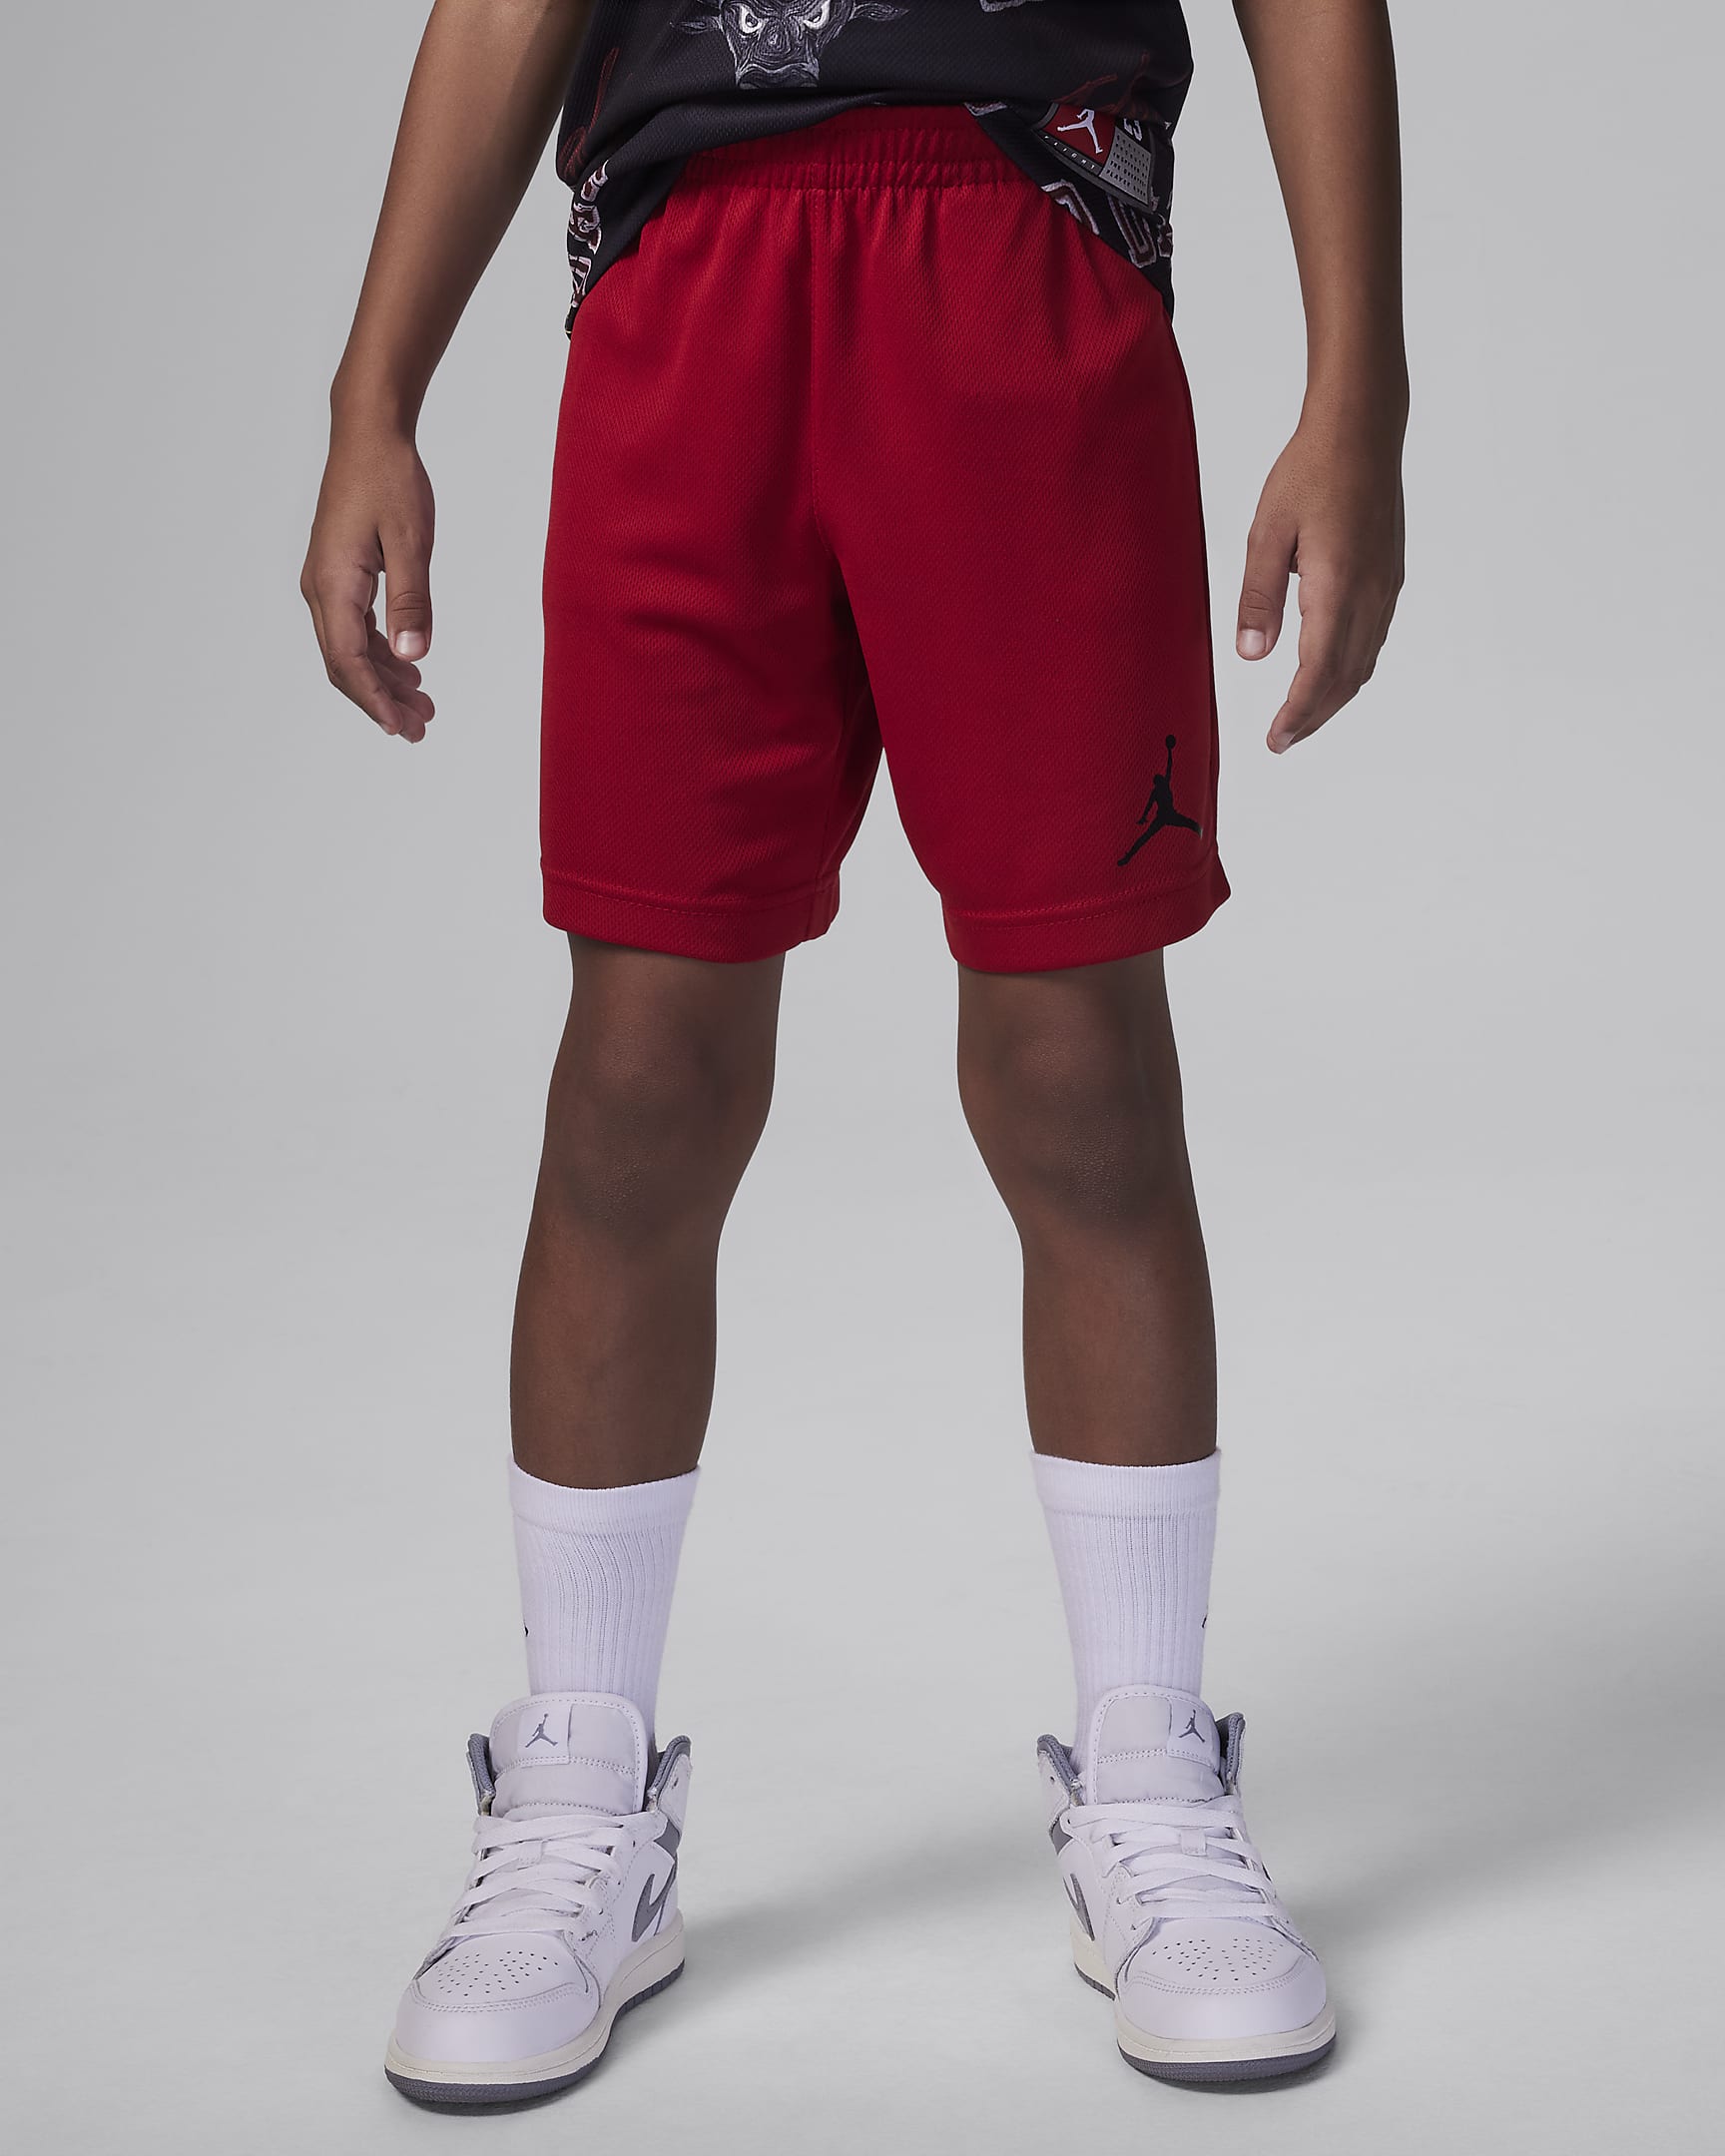 Jordan 23 Little Kids' 2-Piece Jersey Set. Nike.com